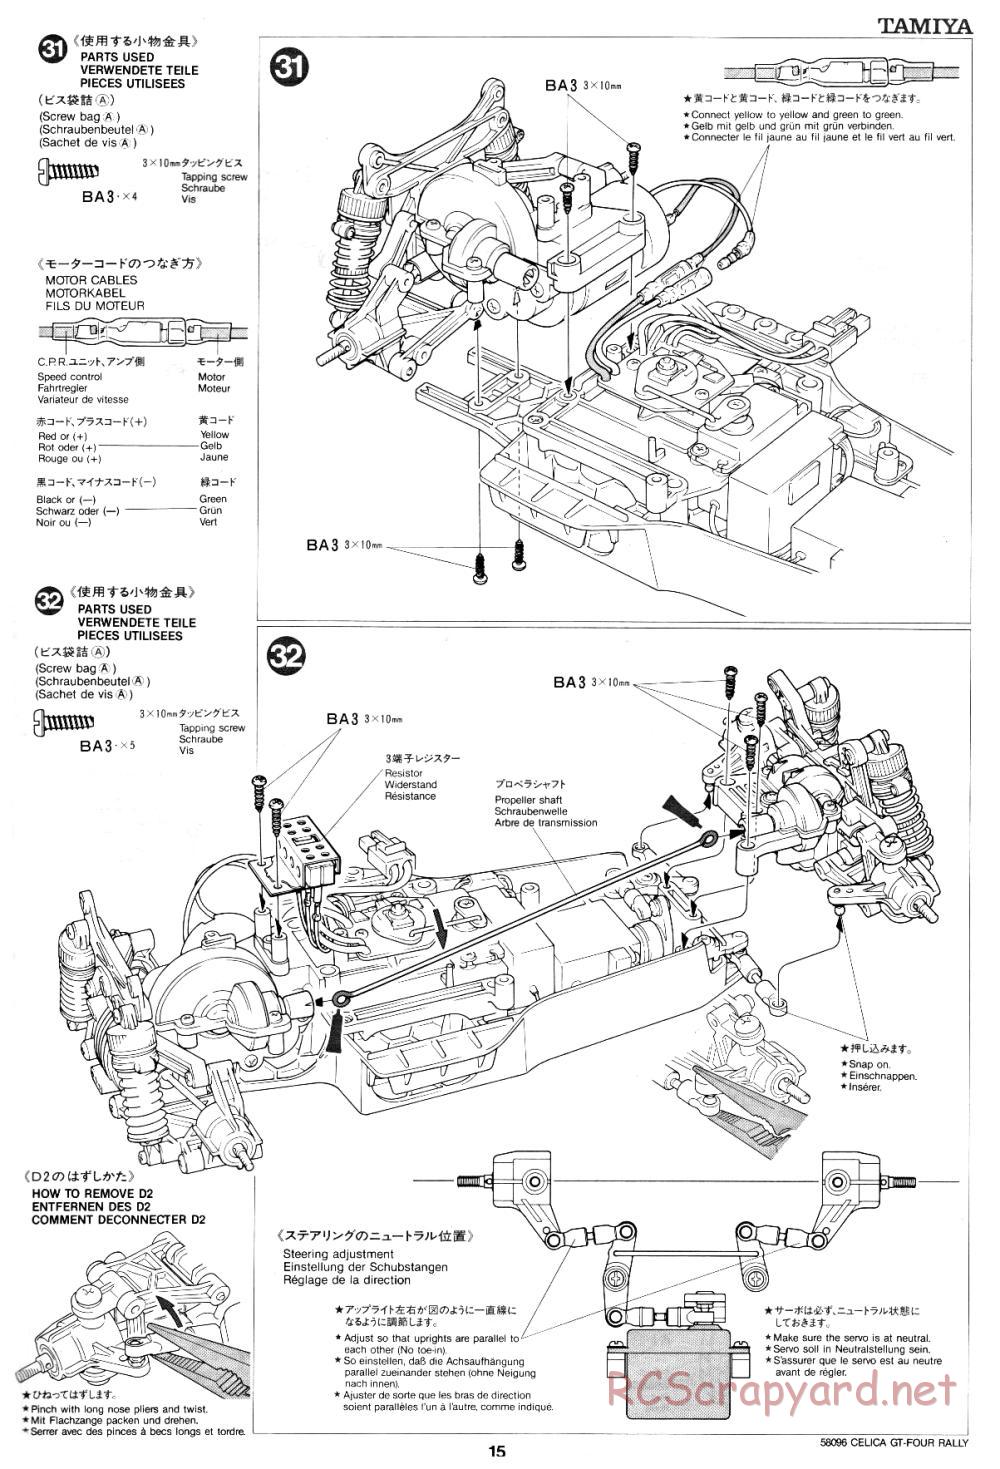 Tamiya - Toyota Celica GT-Four Rally - 58096 - Manual - Page 15